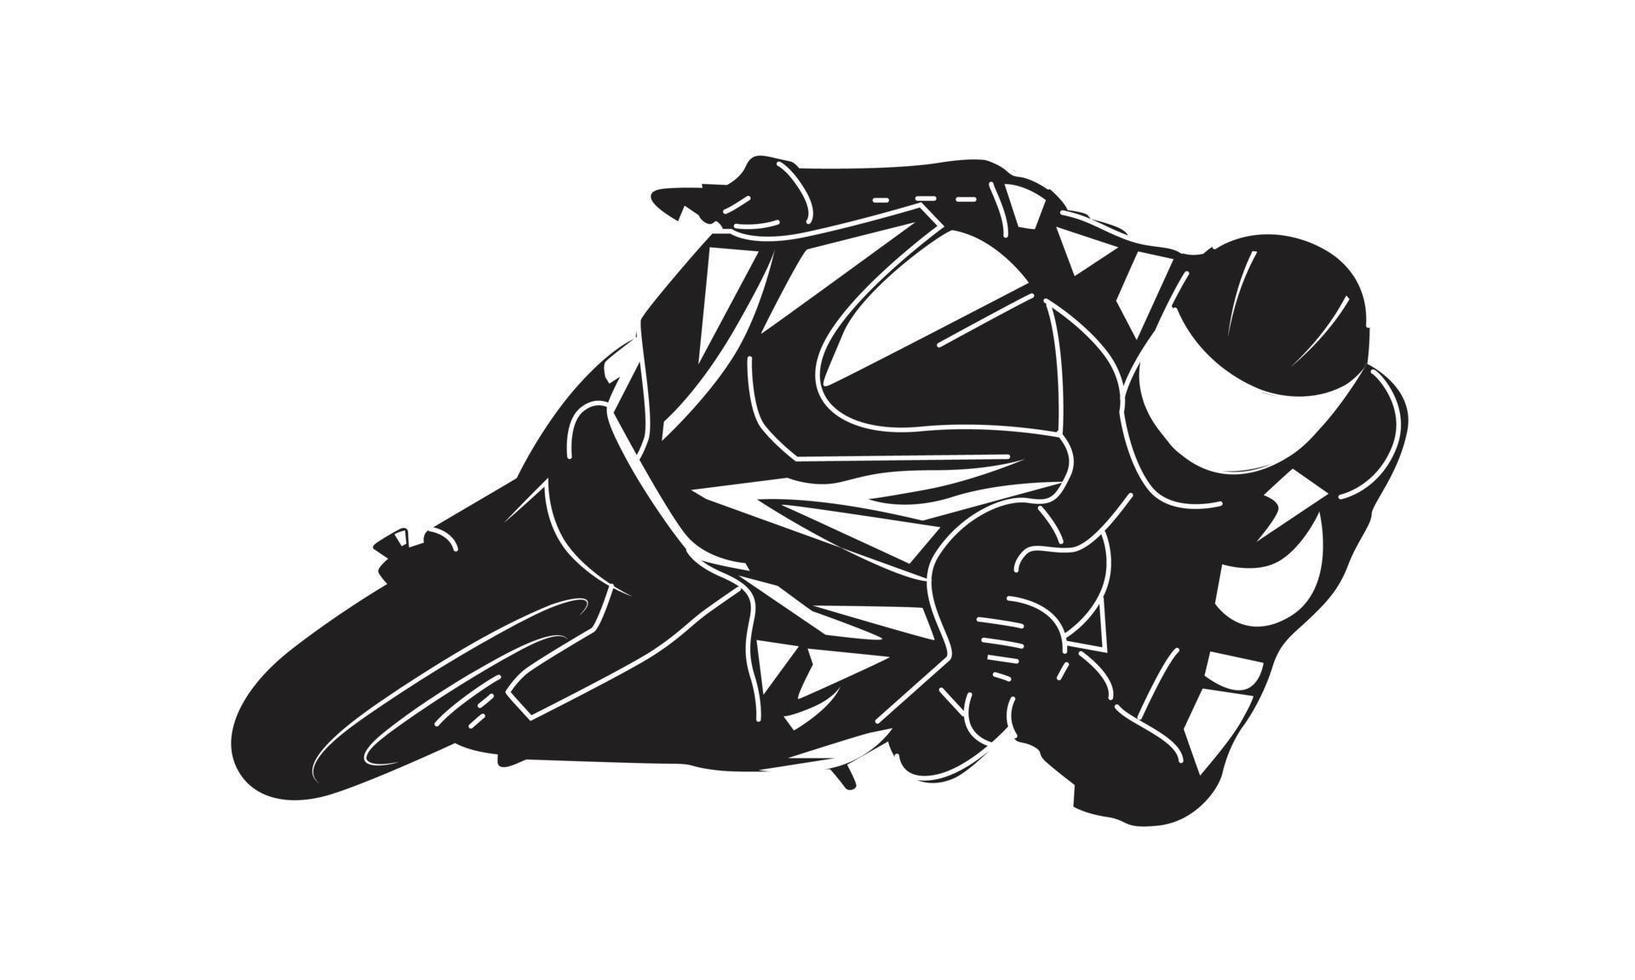 Motorbike Rider silhouette Illustration vector